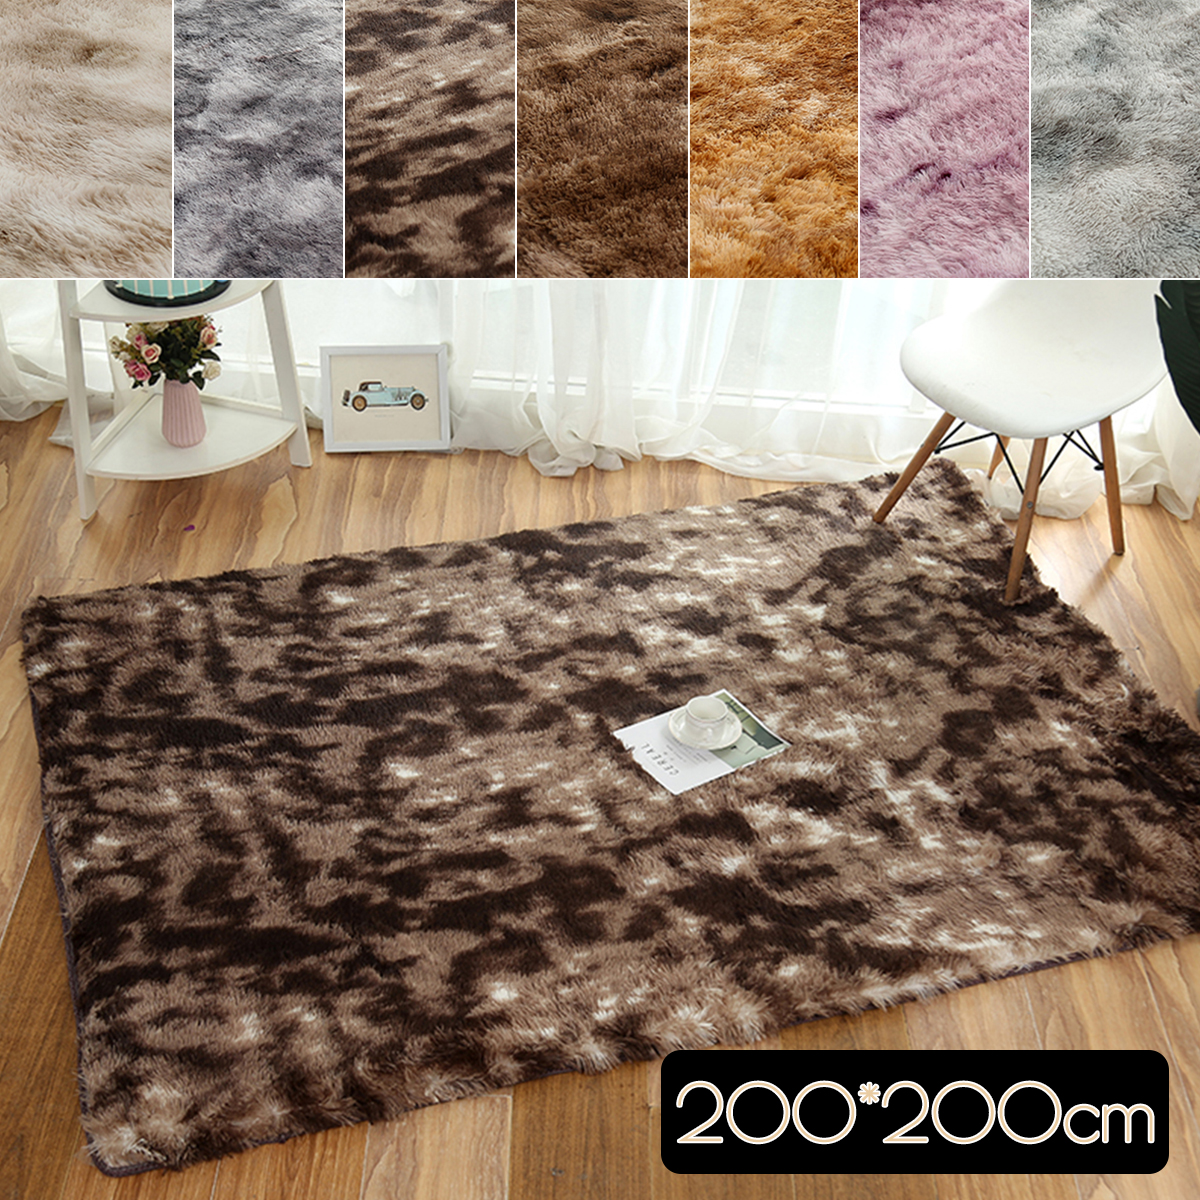 Fluffy-Rug-Shaggy-Floor-Mat-Soft-Faux-Fur-Home-Bedroom-Sheepskin-Hairy-Carpet-Blankets-1661016-2